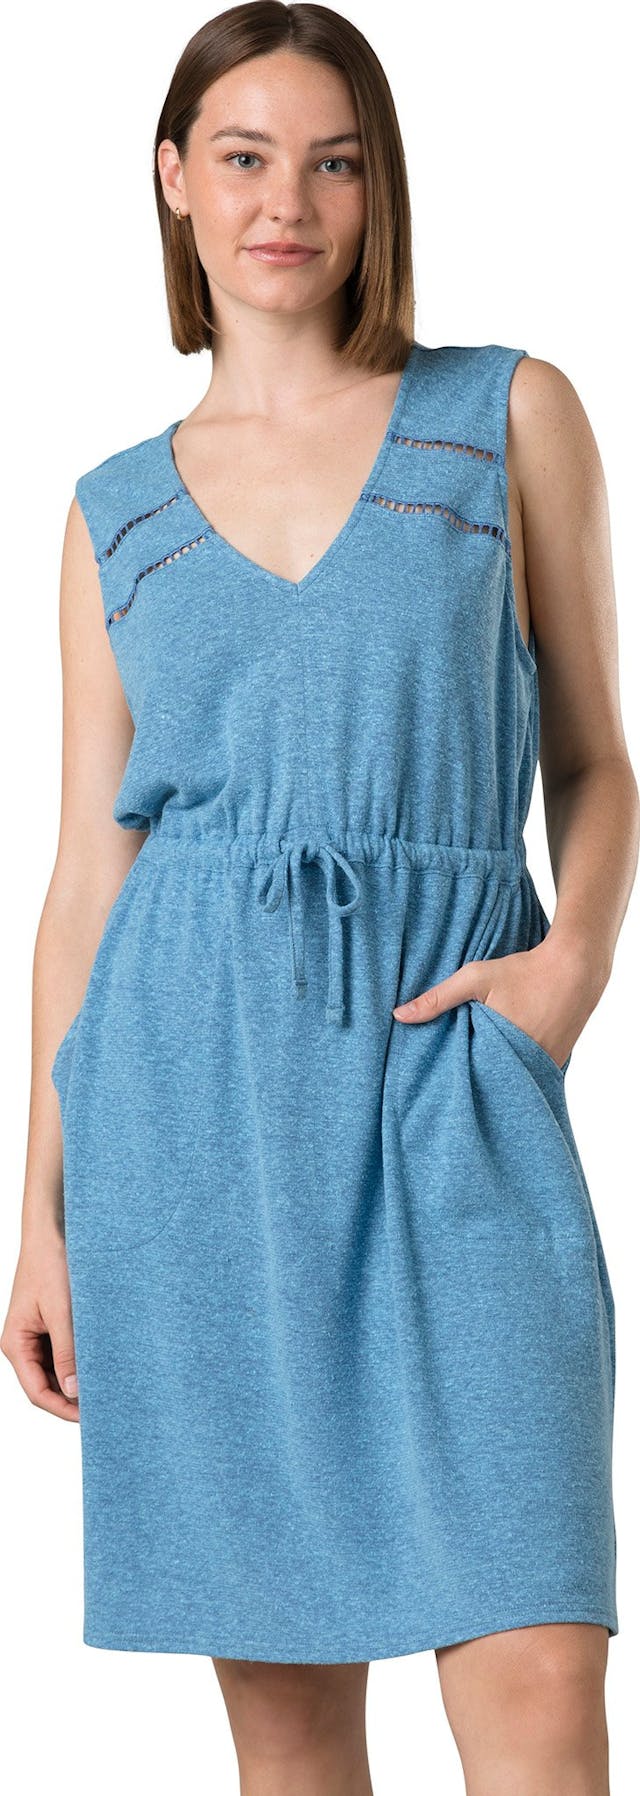 Product image for Cozy Up Korrine Dress - Women's